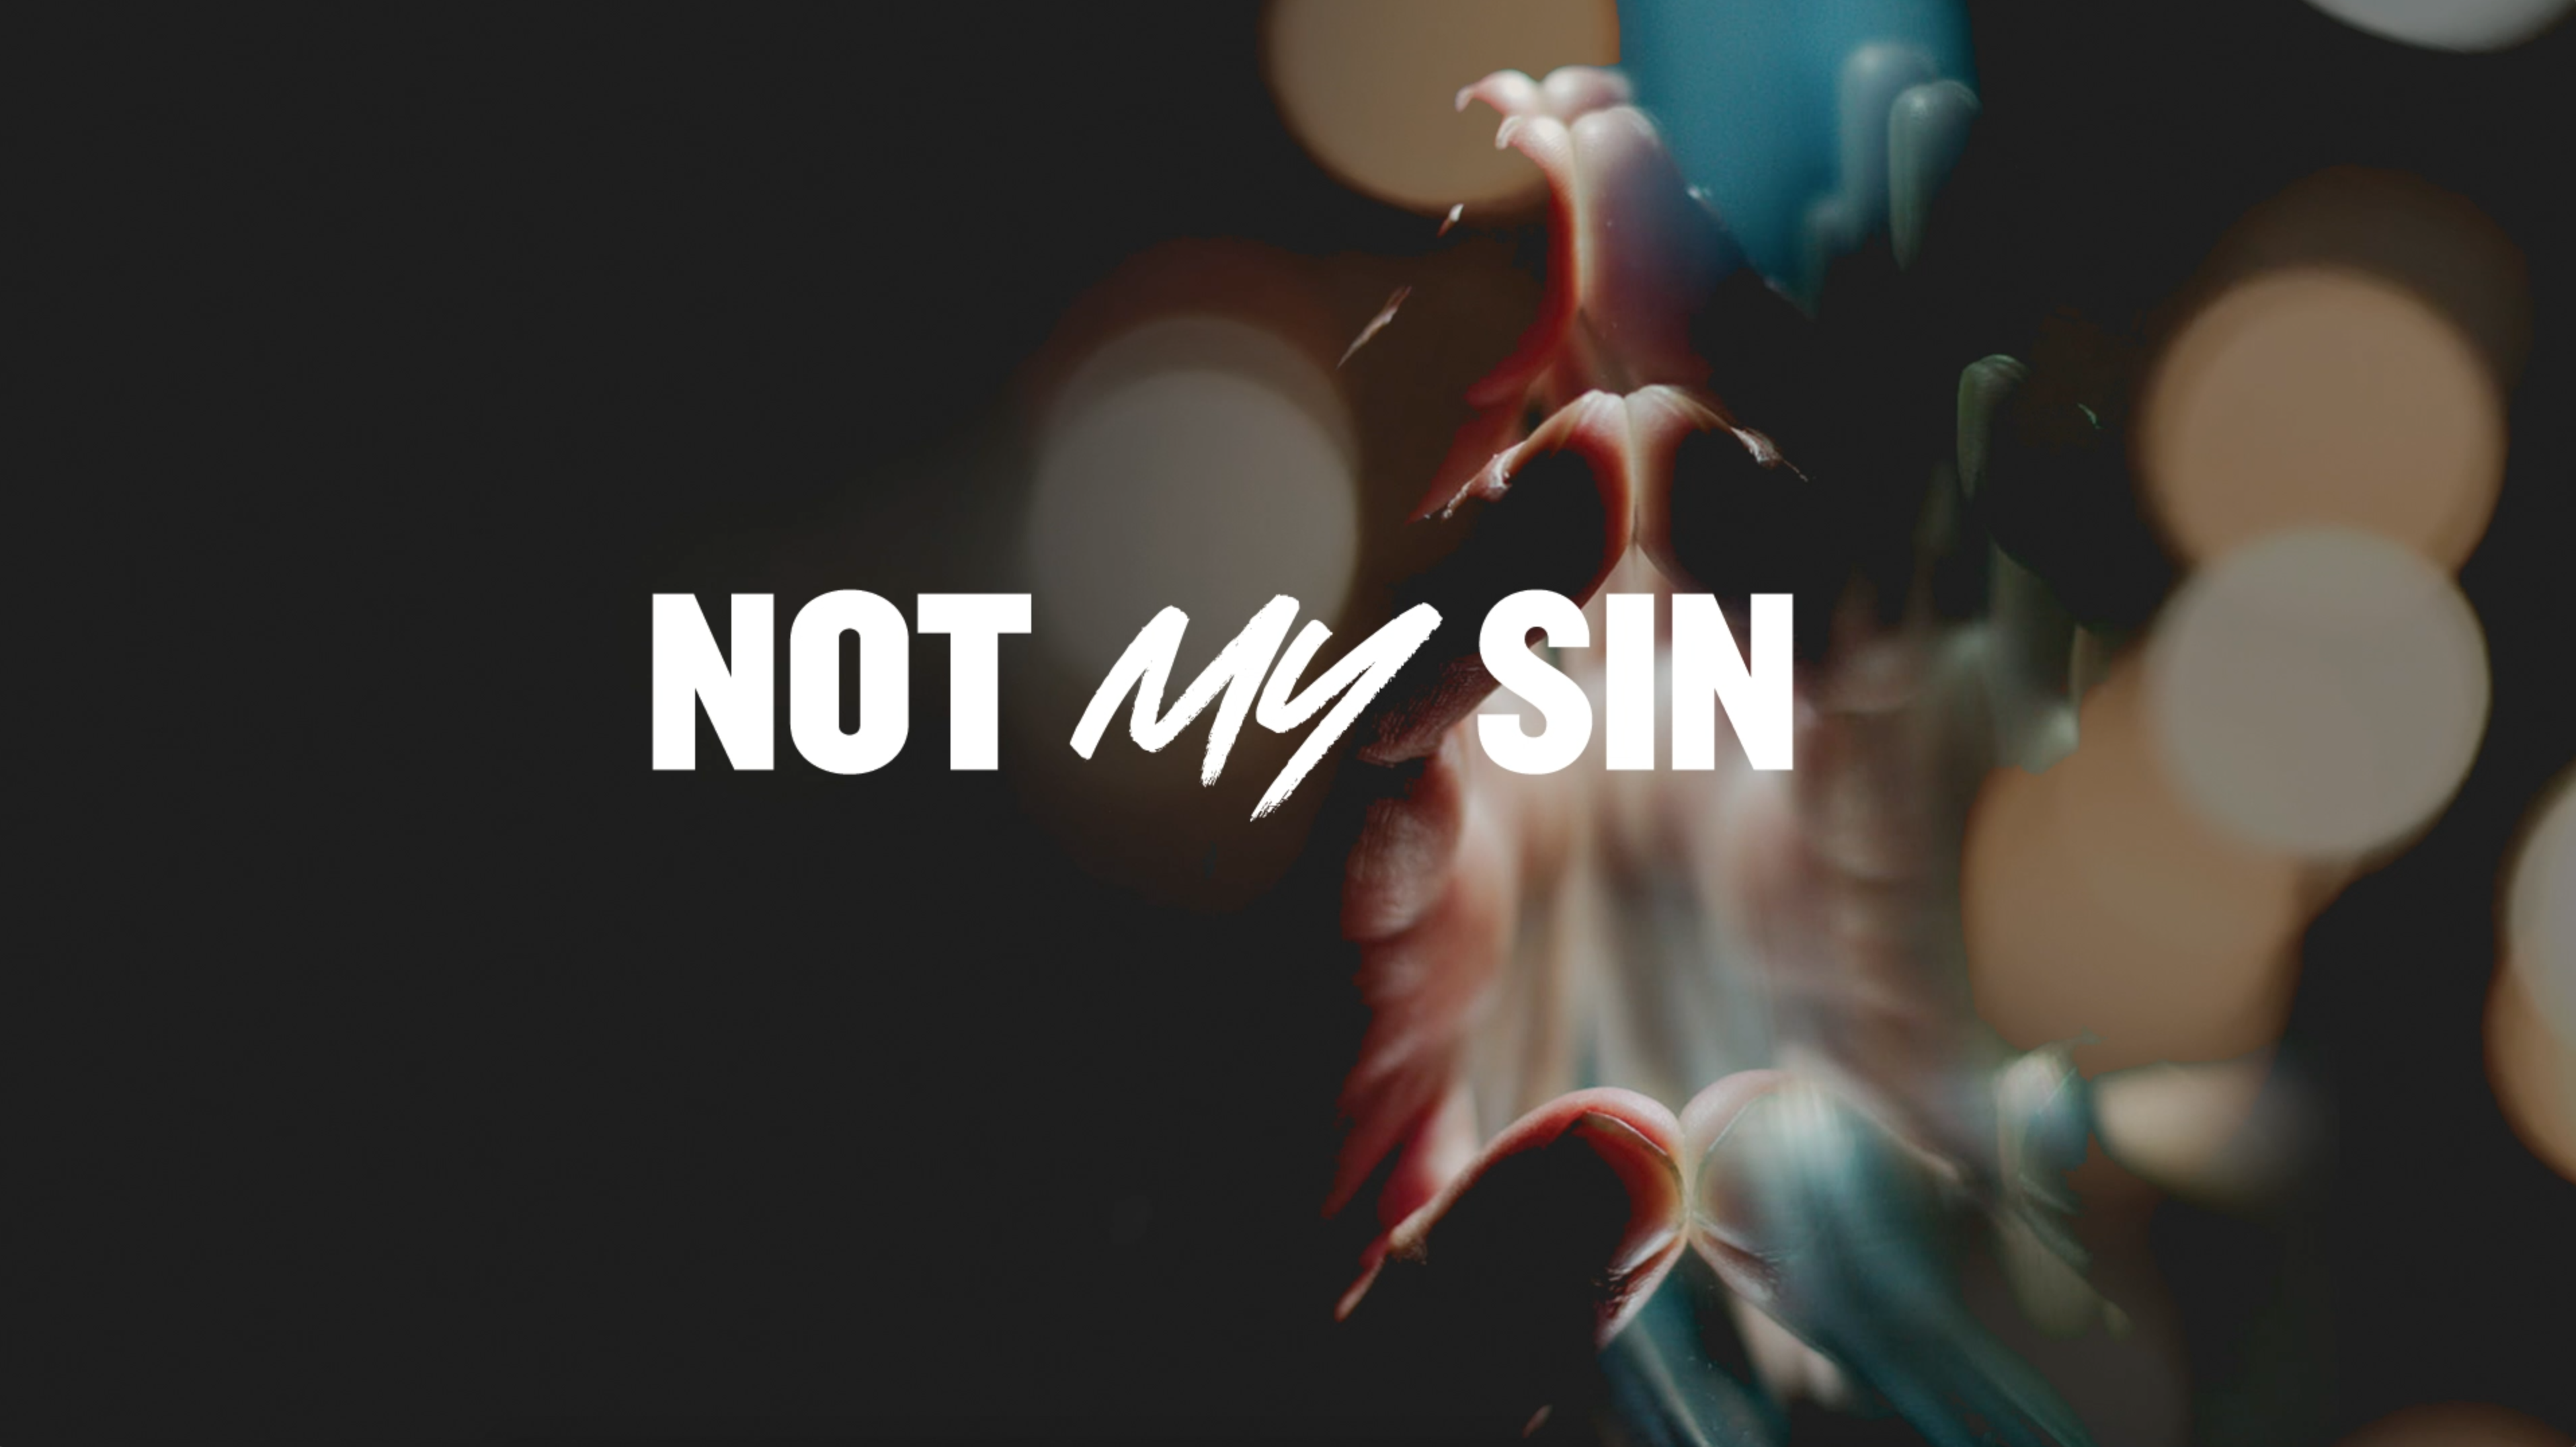 Not My Sin